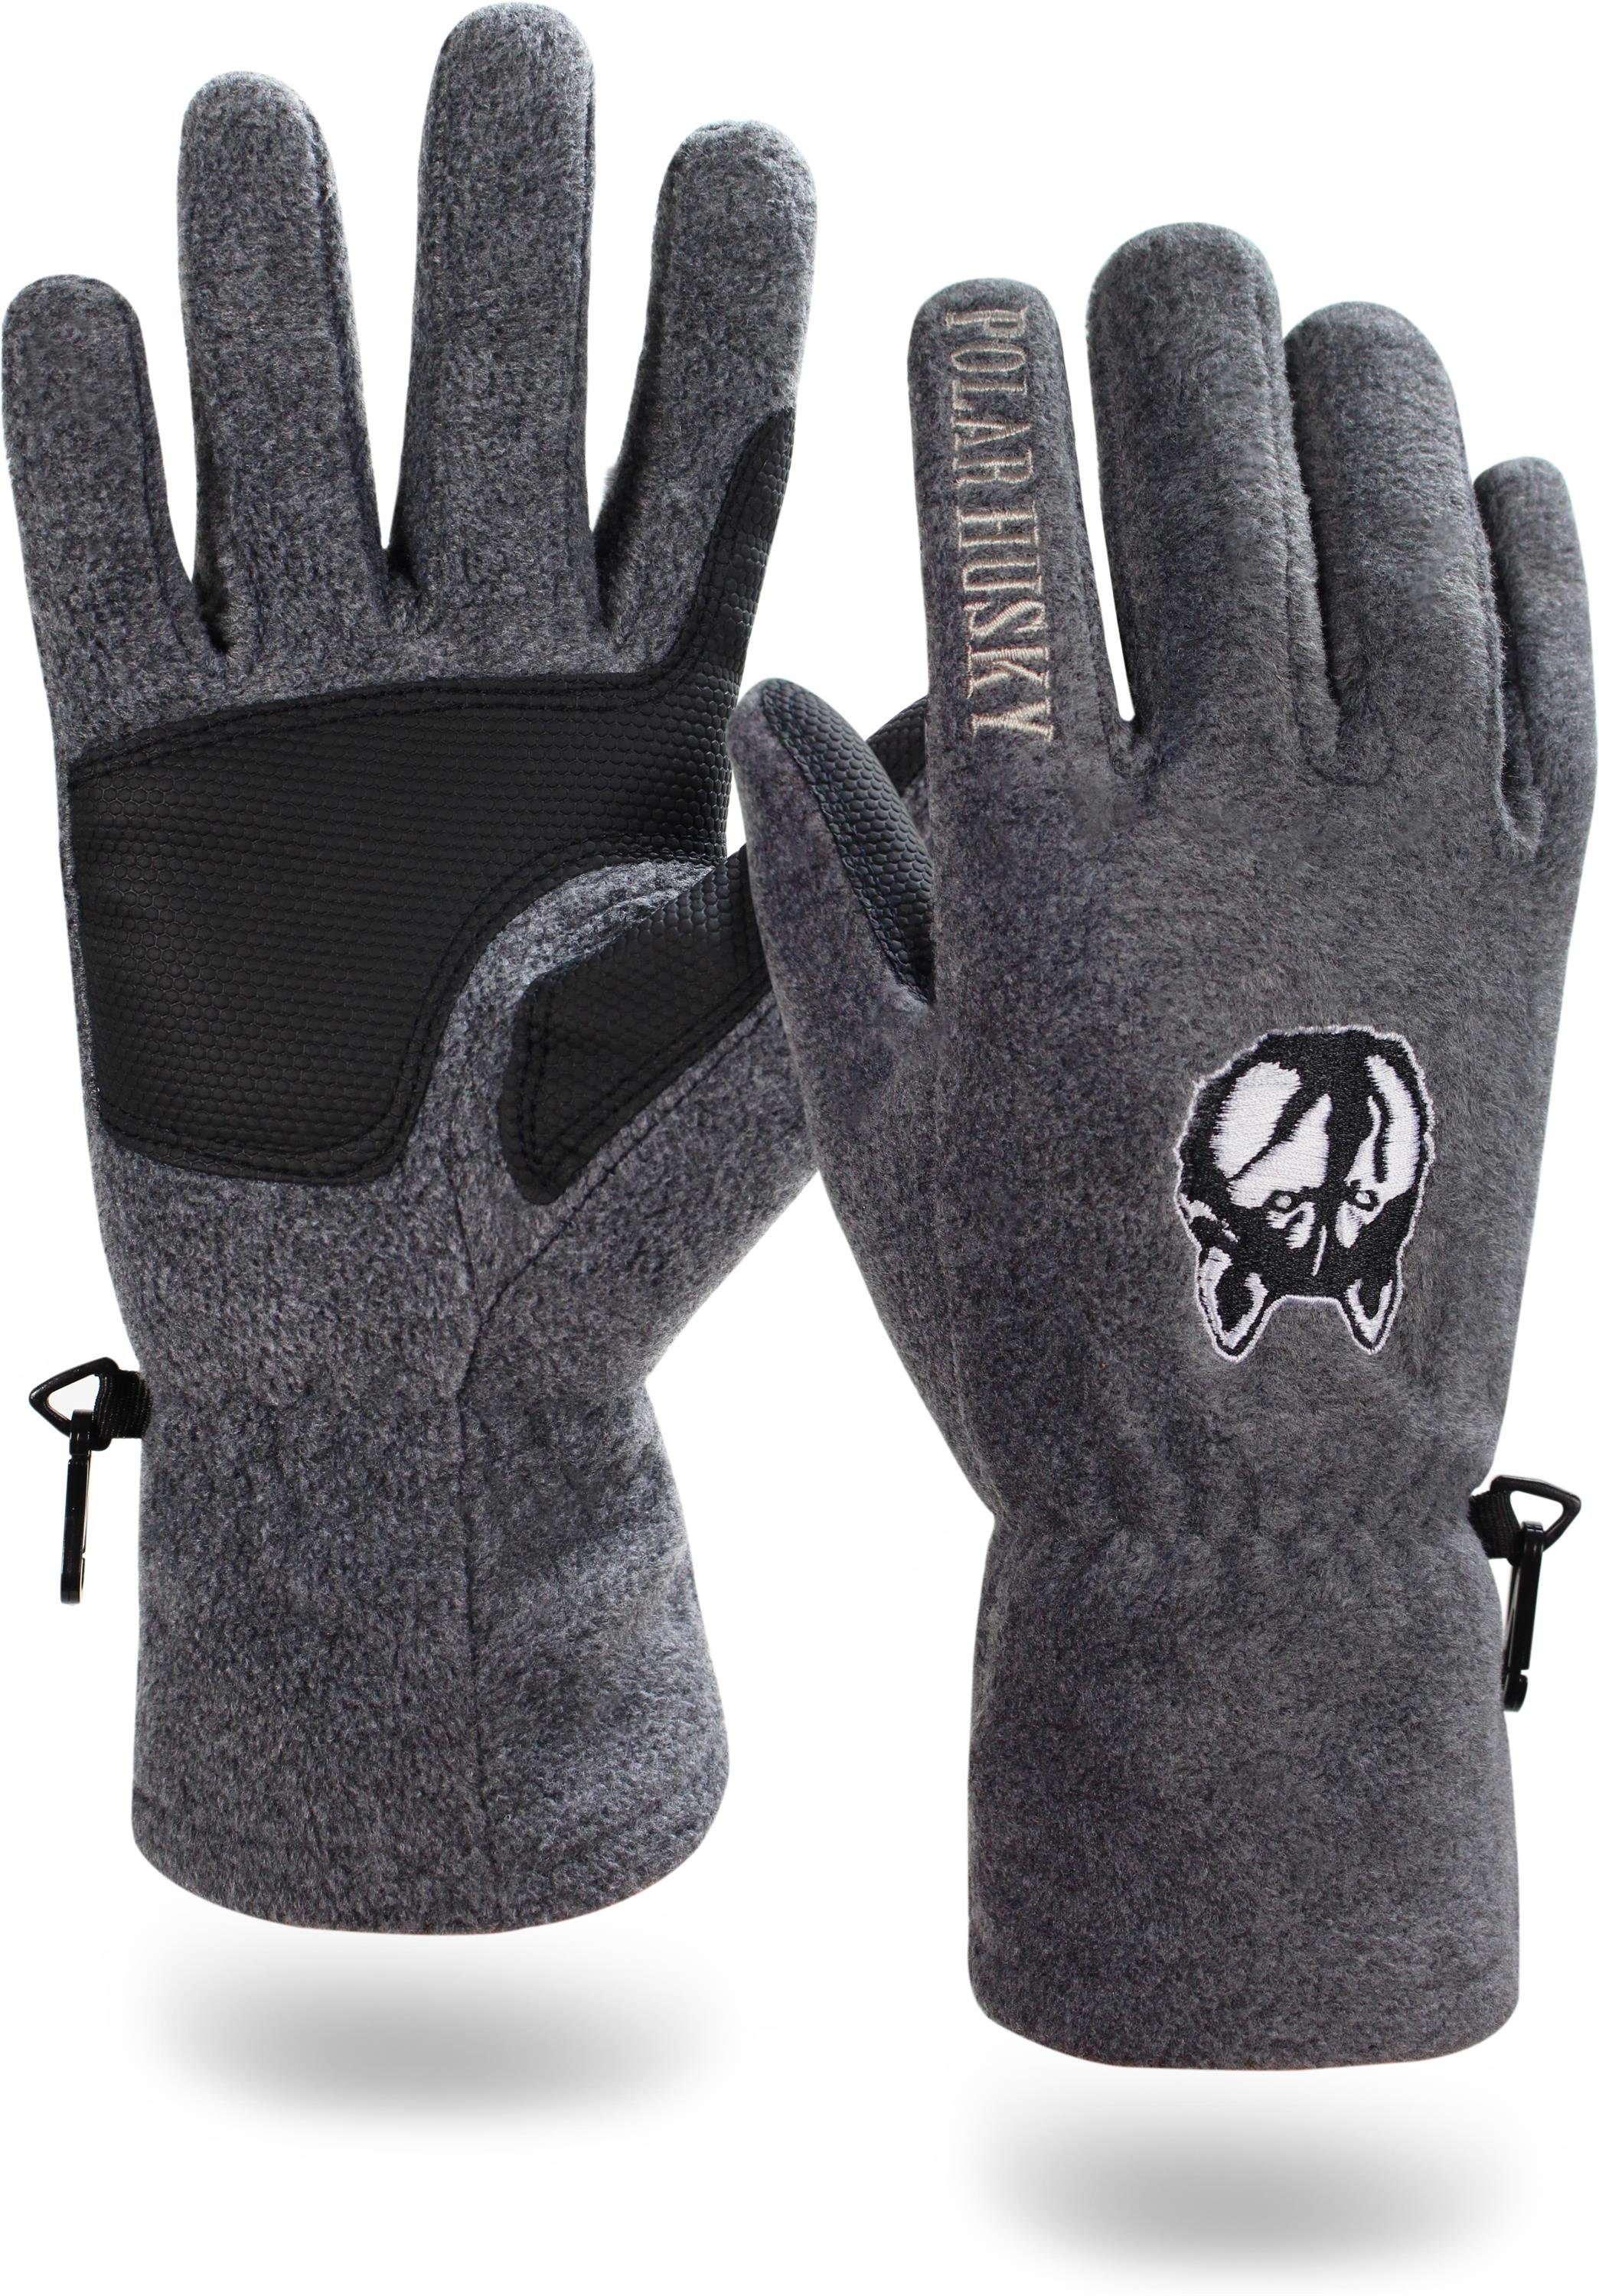 Polar Husky Skihandschuhe Fleece Handschuhe Lhotse Fleecehandschuhe Winterhandschuhe Unterziehhandschuhe mit verstärkter Handinnenfläche für Damen und Herren Grau